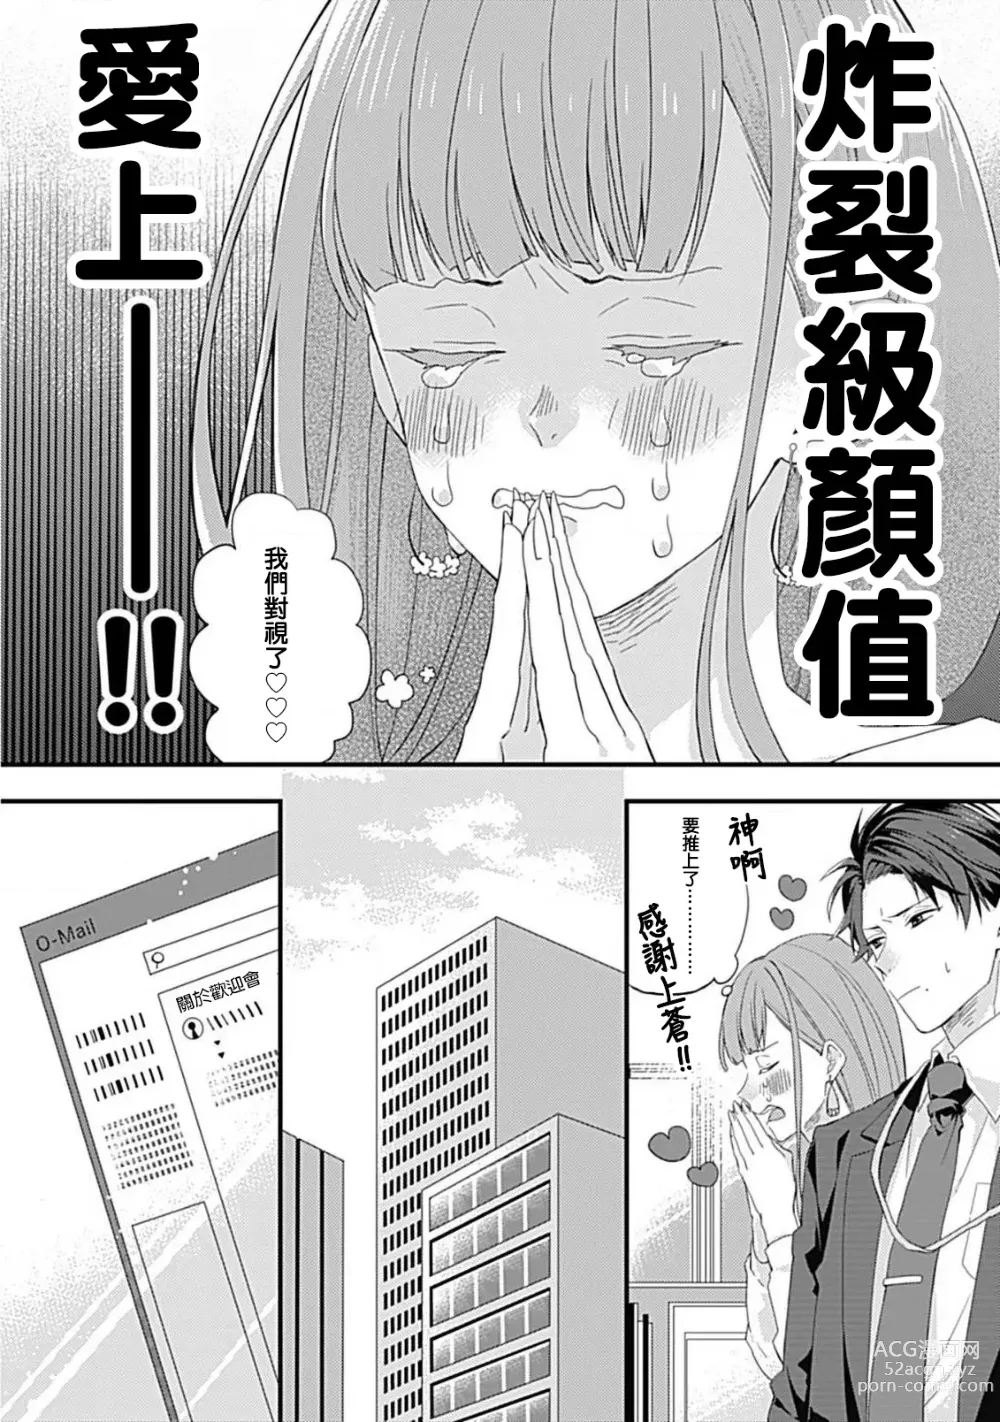 Page 5 of manga 辛德瑞拉综合征与溺爱王子